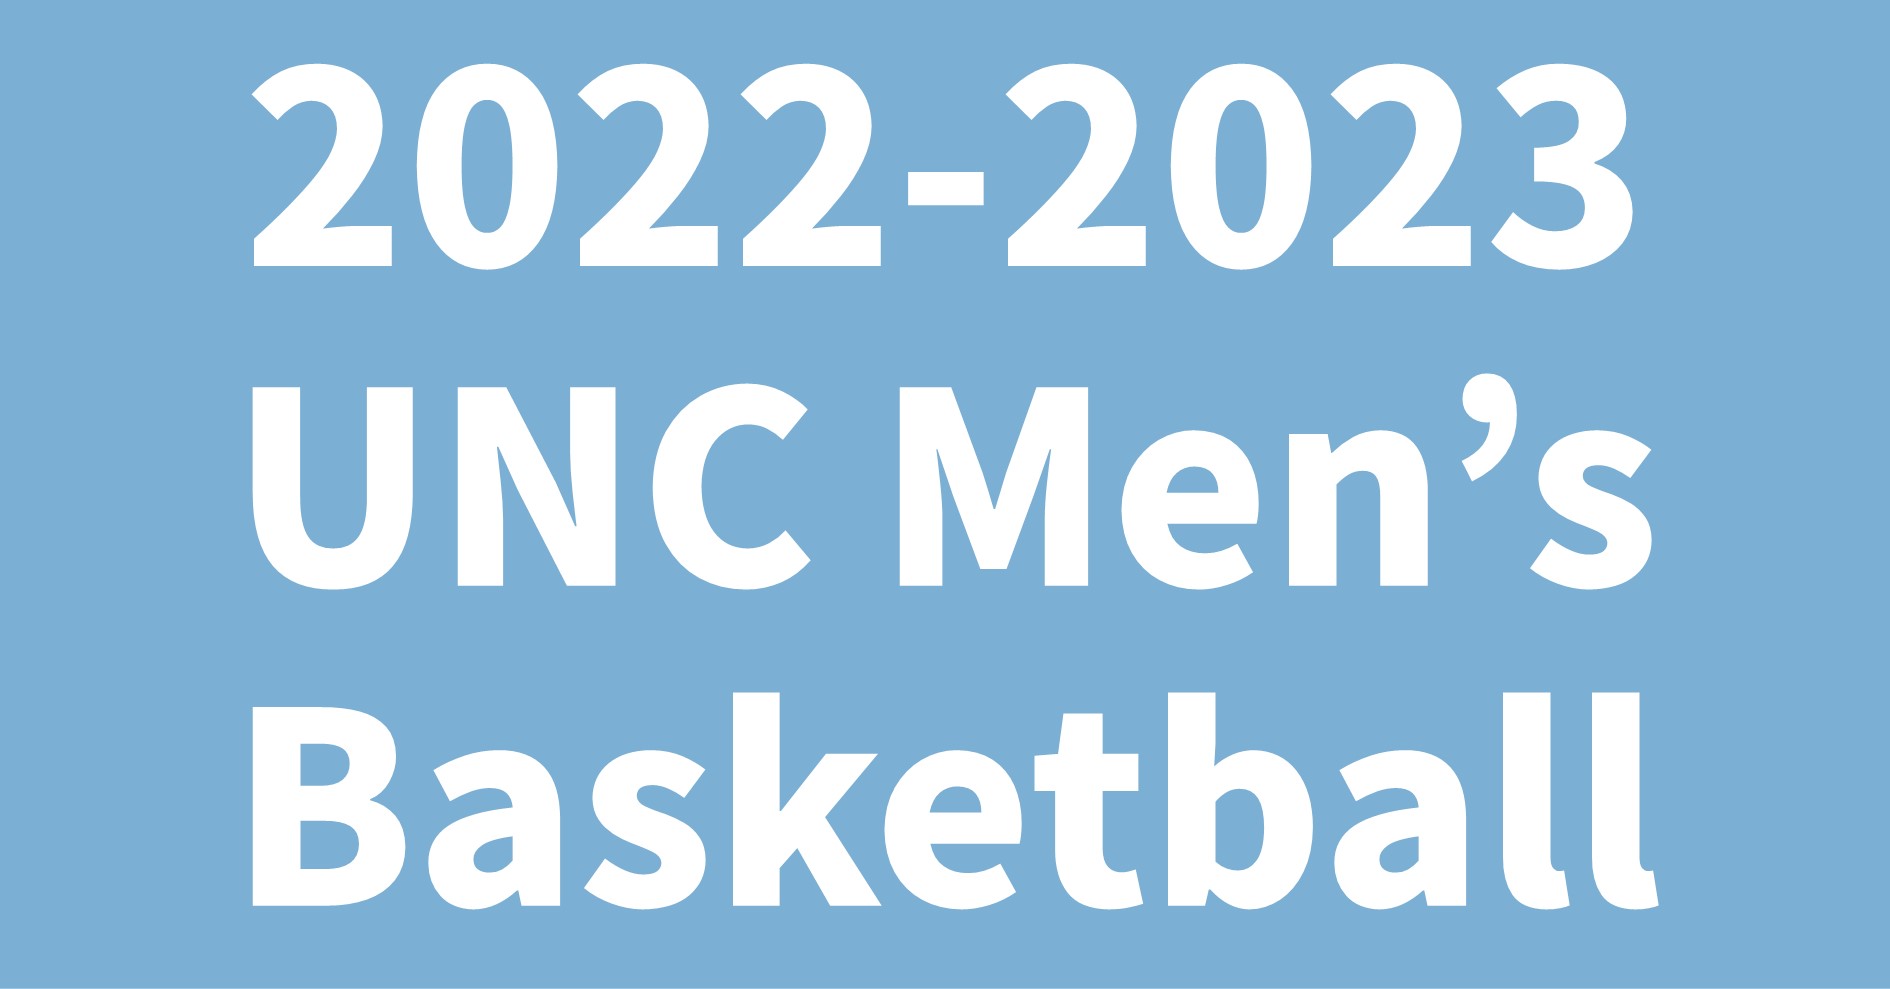 2022-2023 UNC Men's Basketball